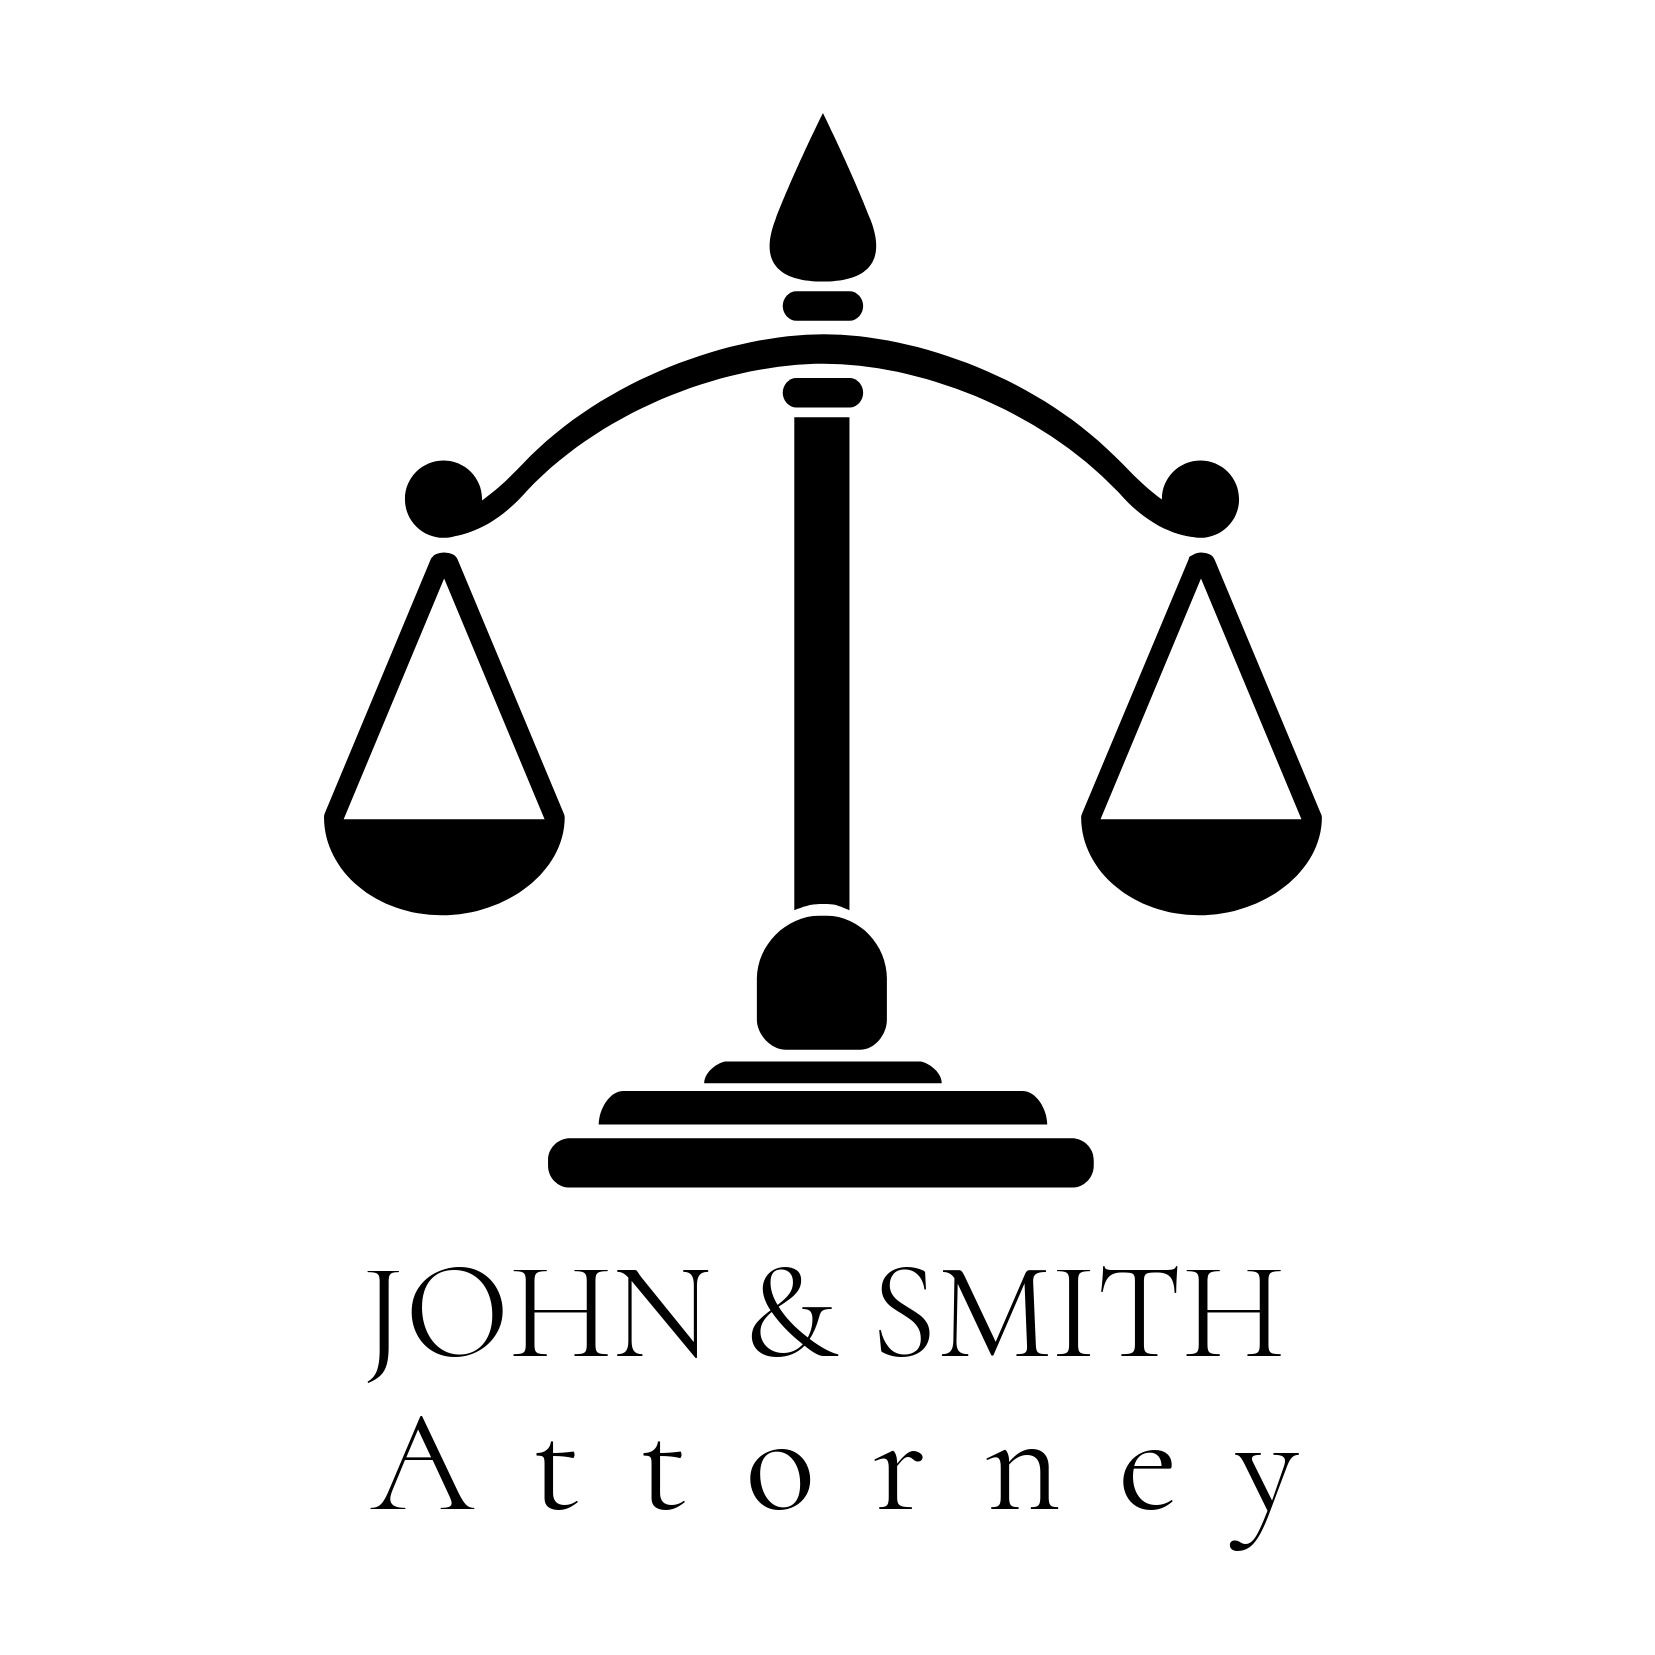 Designs de logotipos criativos para advogados